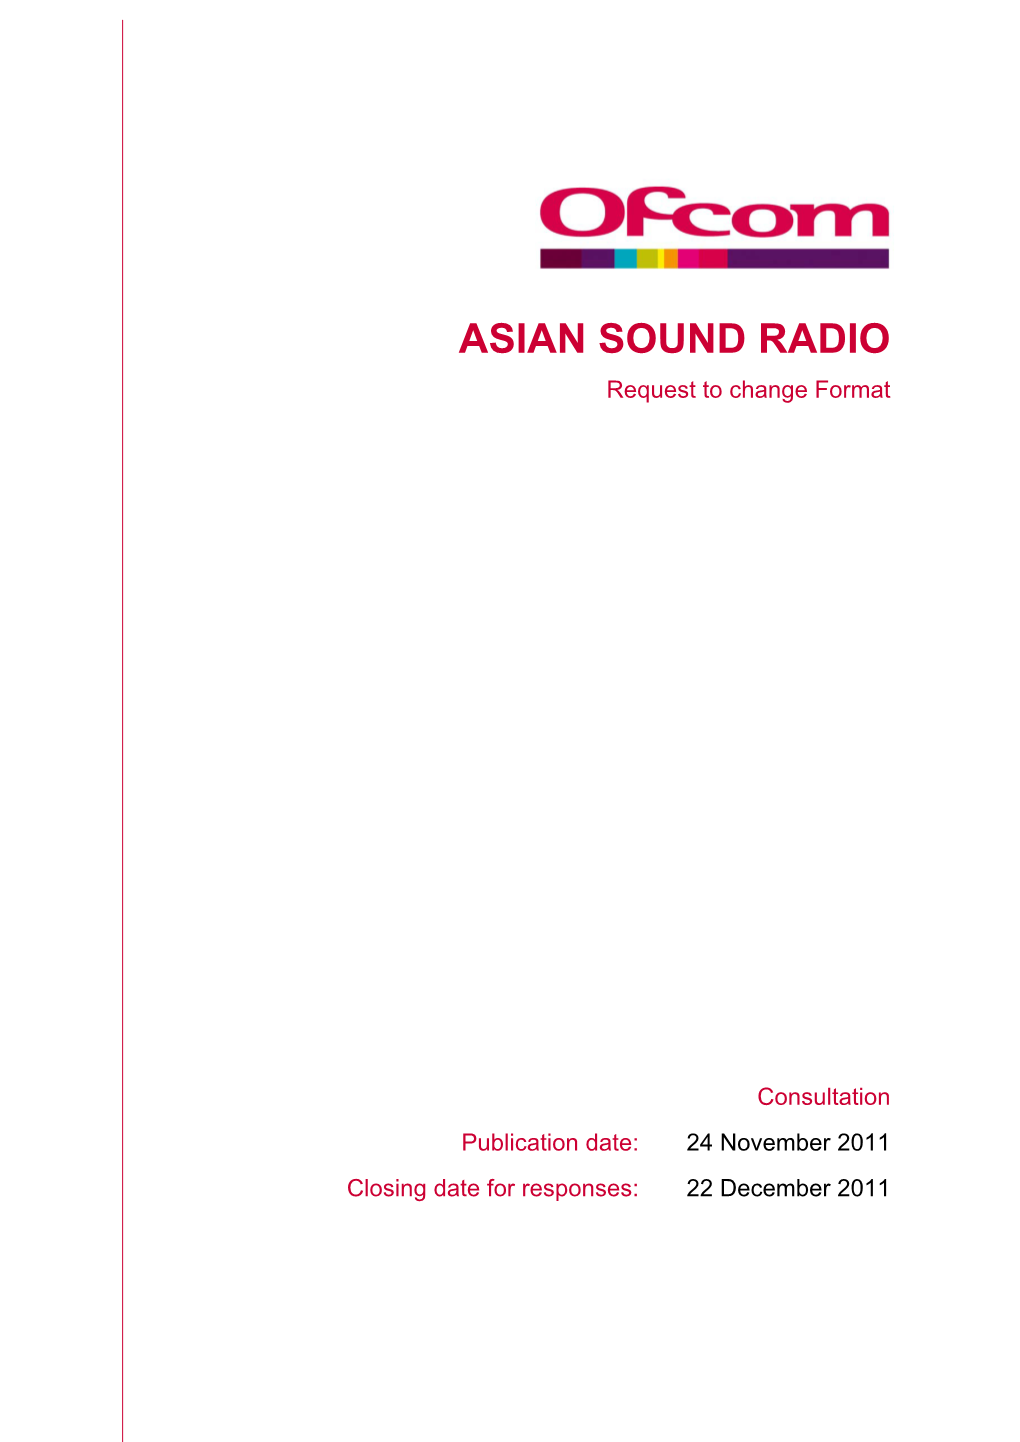 ASIAN SOUND RADIO Request to Change Format